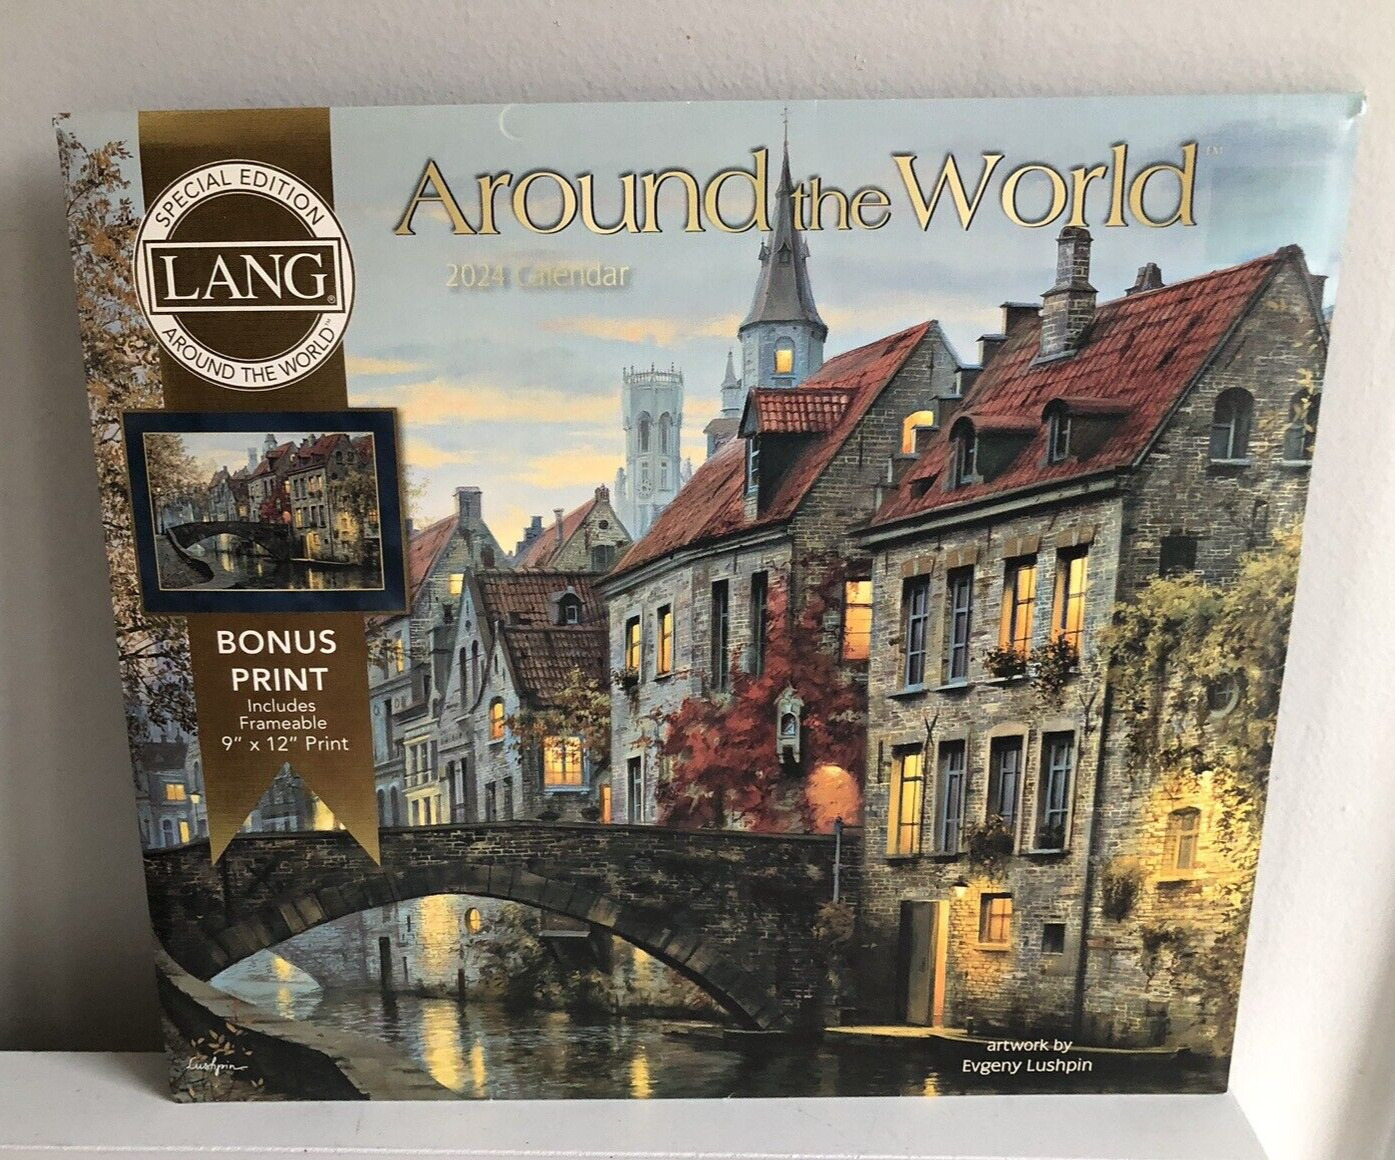 NEW 2024 Lang Calendar “Around The World” with Bonus Print Special